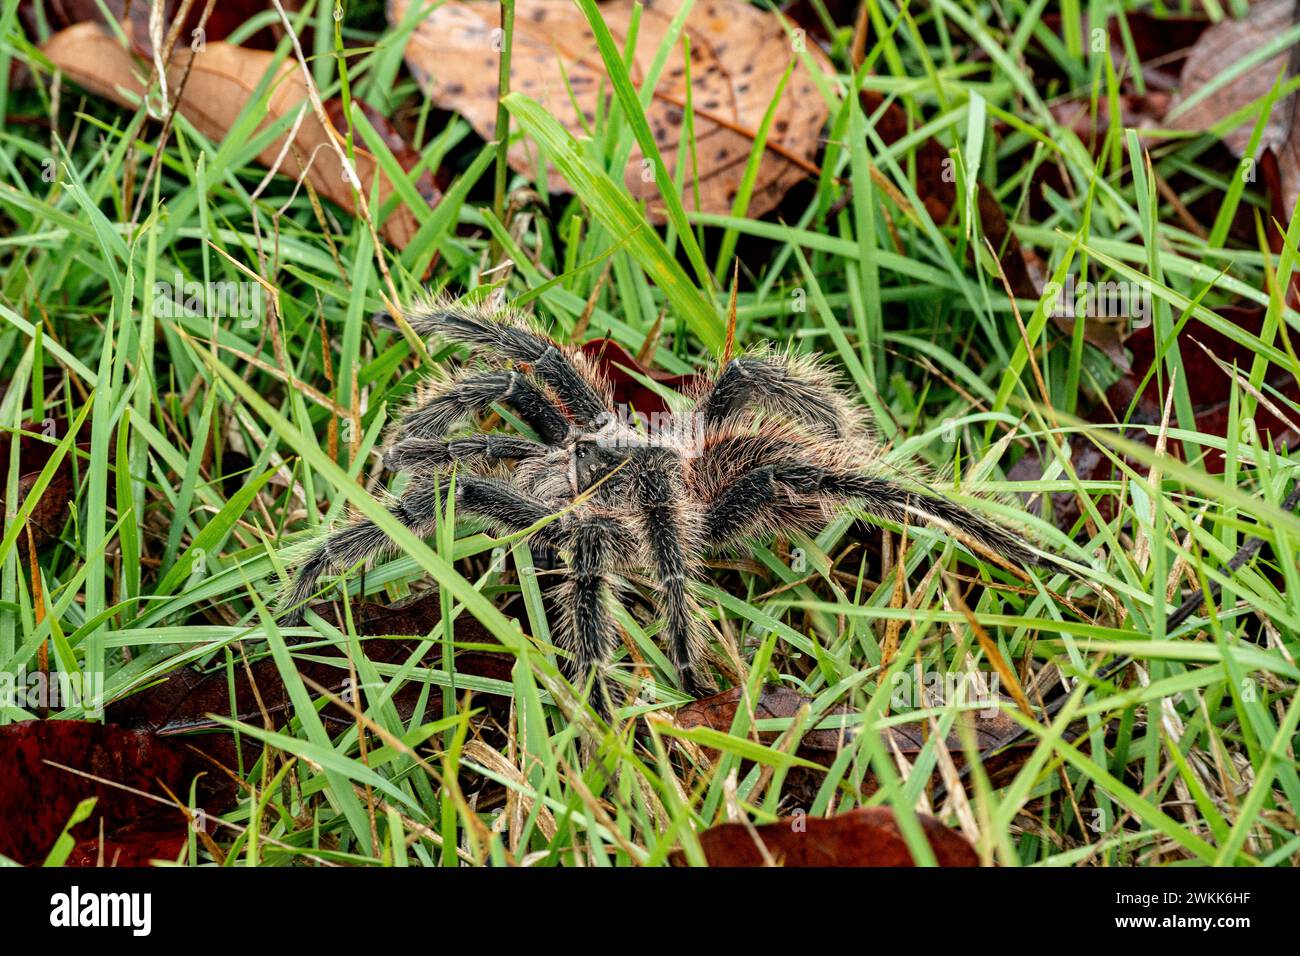 The Brazilian Tarantula or Theraphosidae photographed on a farm in North Eastern Brazil Stock Photo